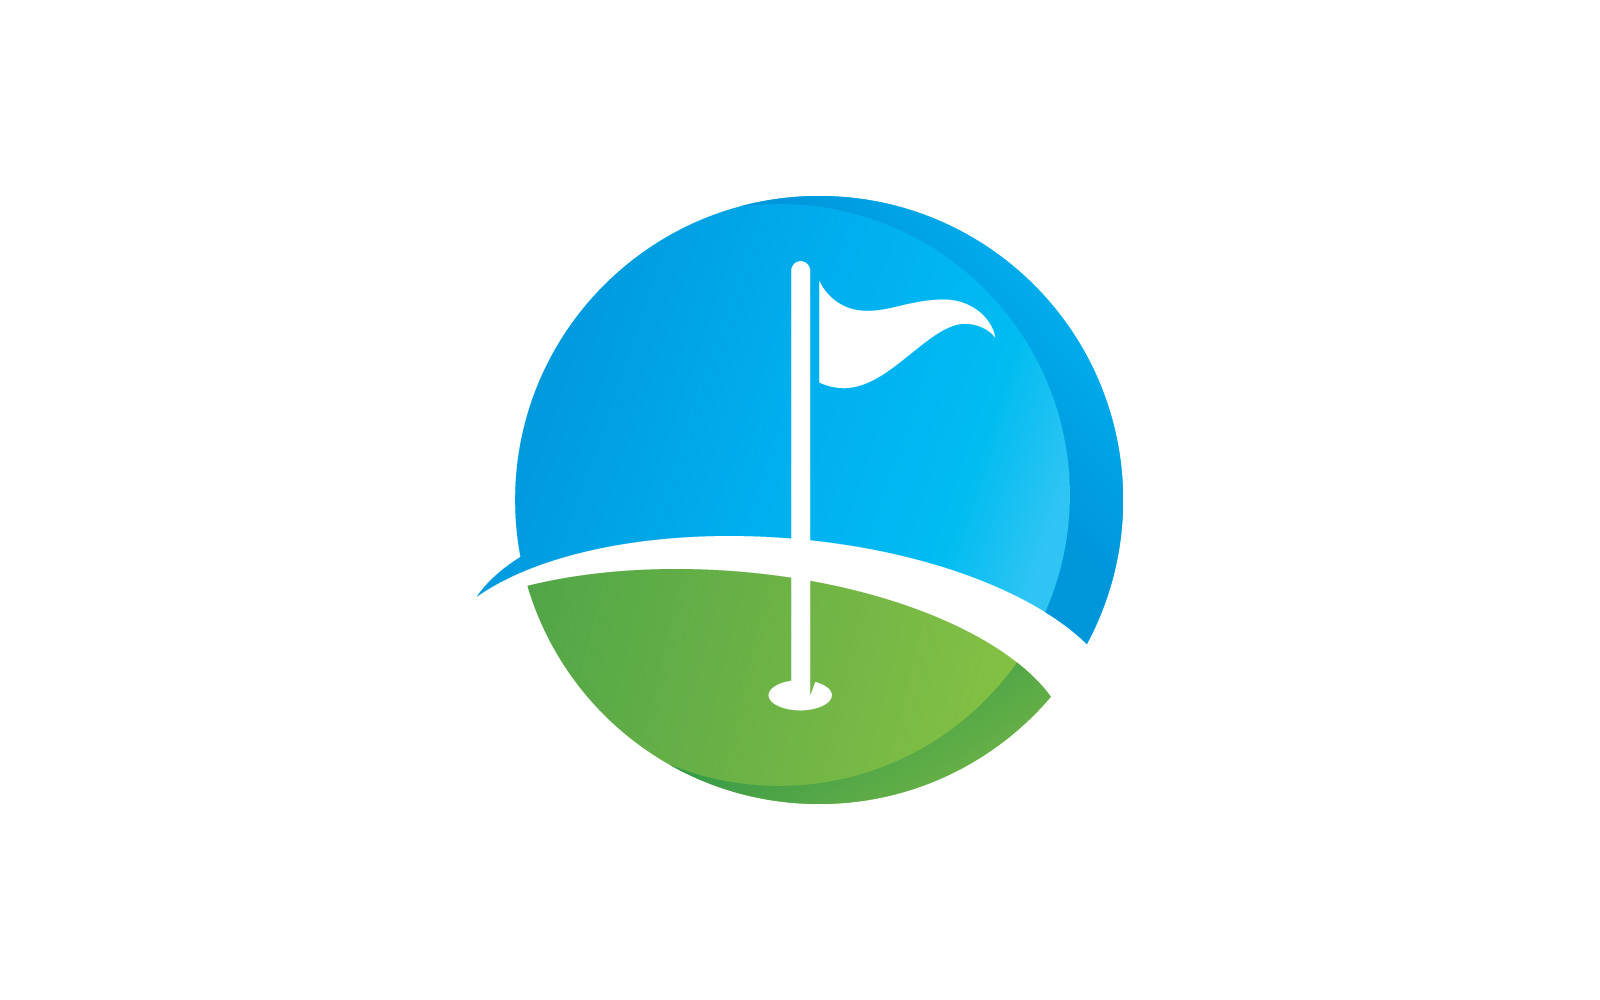 Golf logo with ball design elements.V8